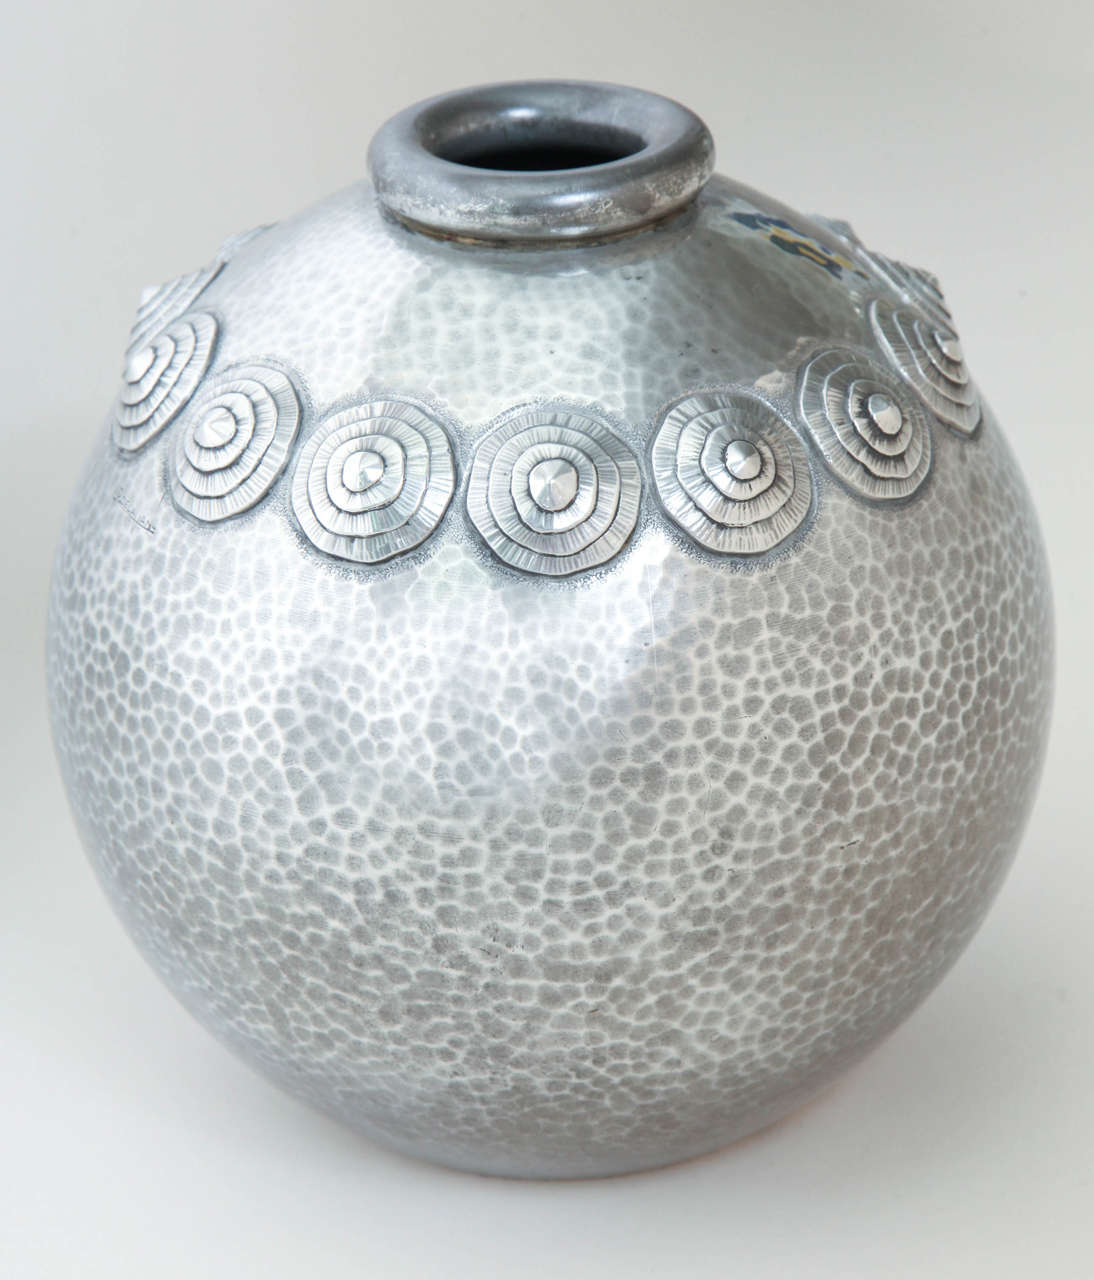 Spherical pewter vase with 12 applied circular designs around the neck and with ring collar.

Signed R. Delavan/ Impressed underneath R. DELAVAN/ DECORATEUR/ PARIS/ ETAIN D'ART/ DEPOSE